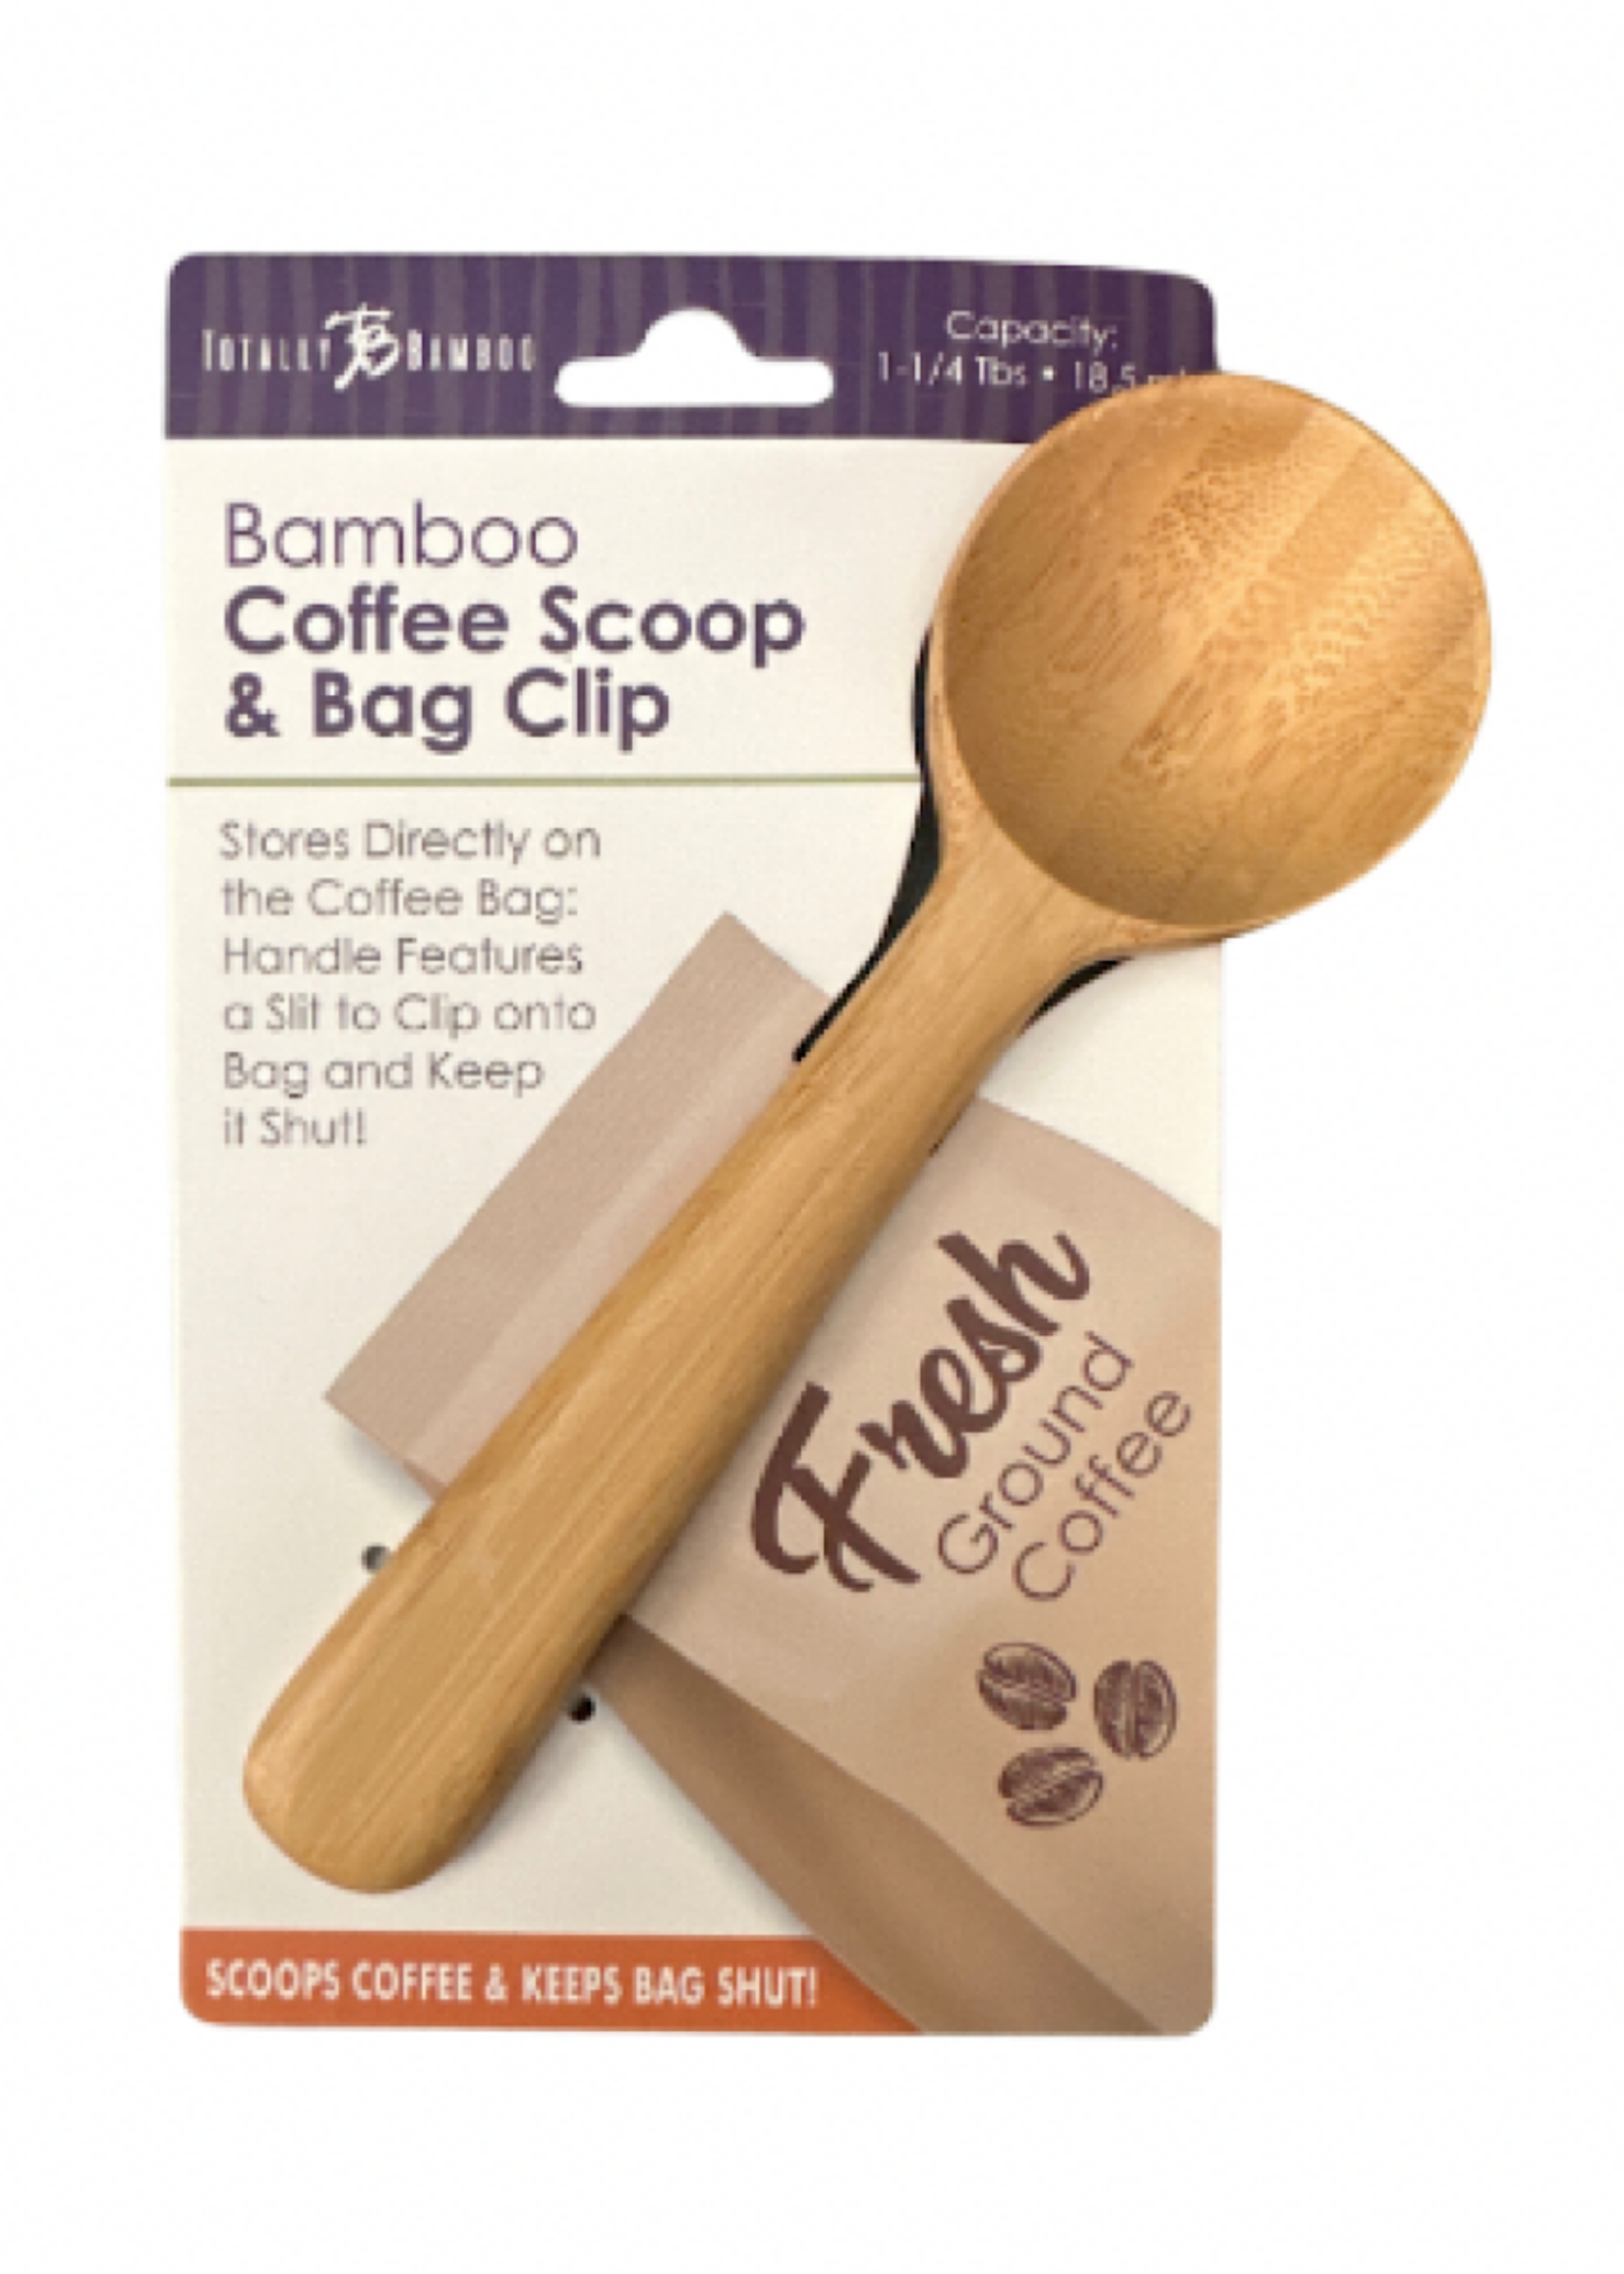 Bamboo Coffee Scoop & Bag Clip